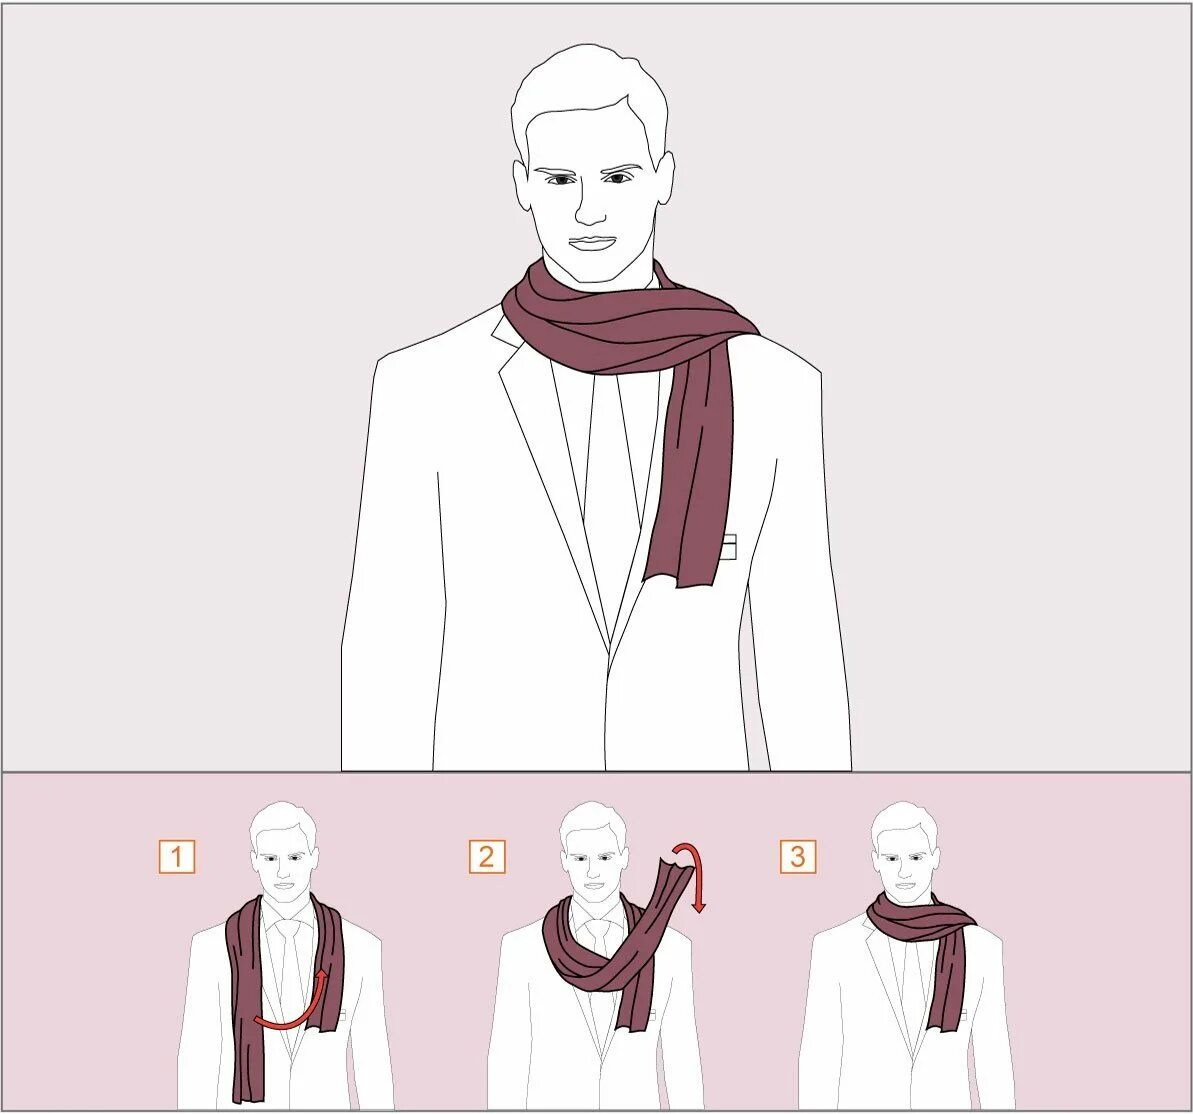 Как завязать платок мужчине